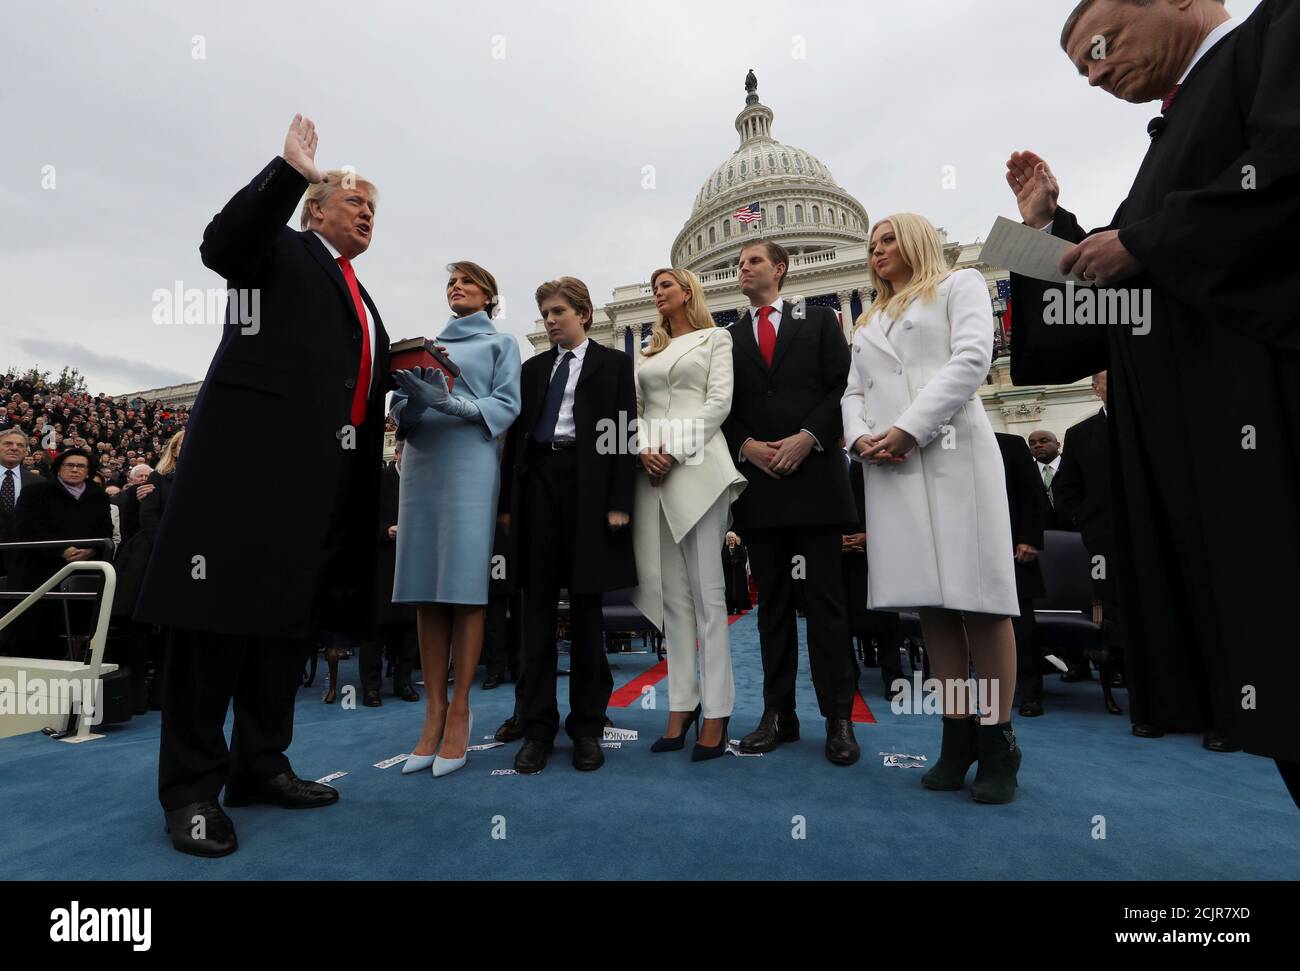 Photograph 45th U.S President Donald Trump Whitehouse Photo 2017 8x10 